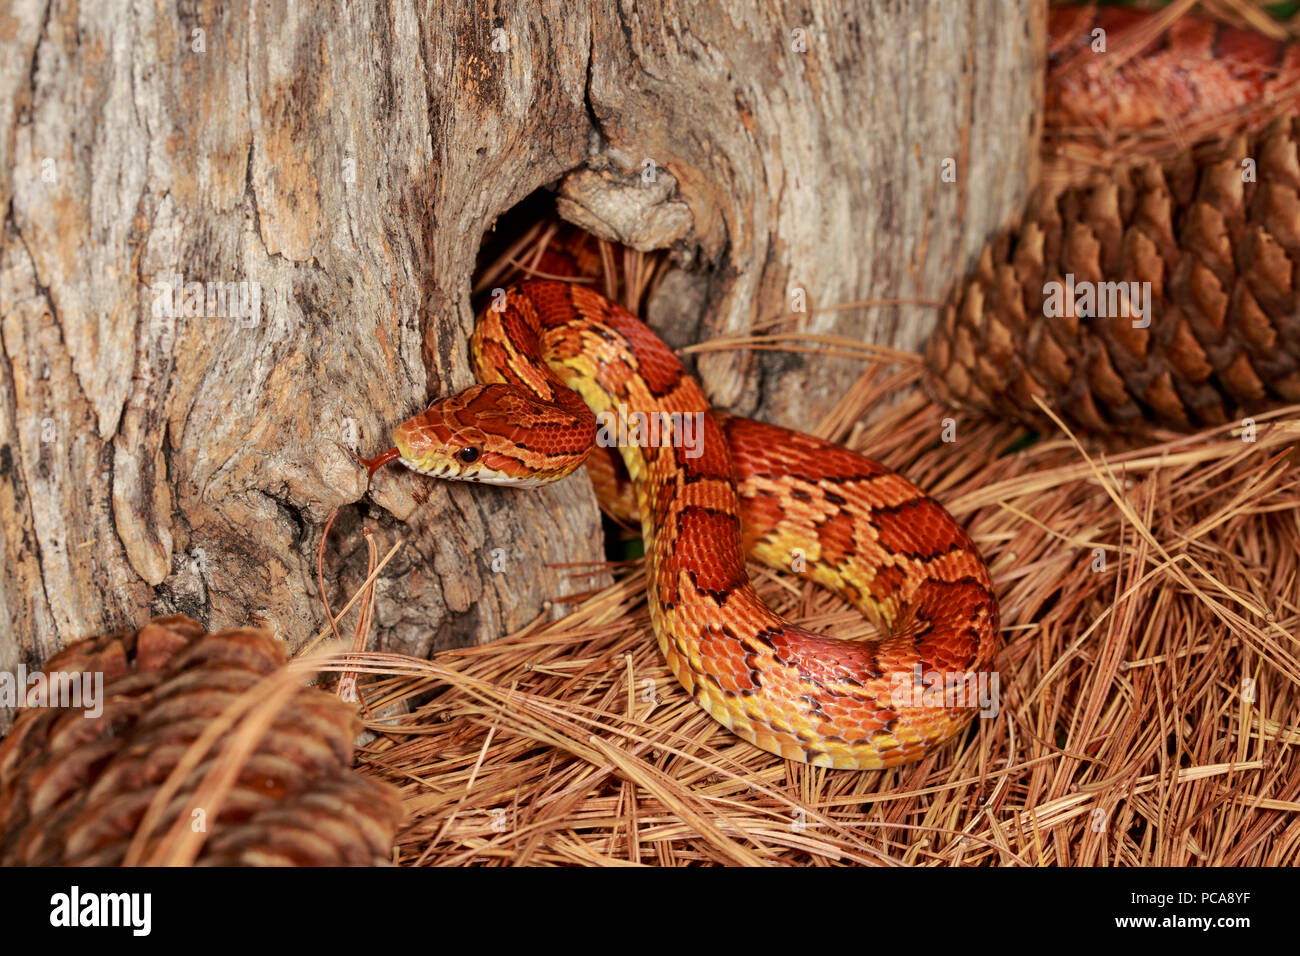 Corn snake (Pantherophis guttatus) Stock Photo